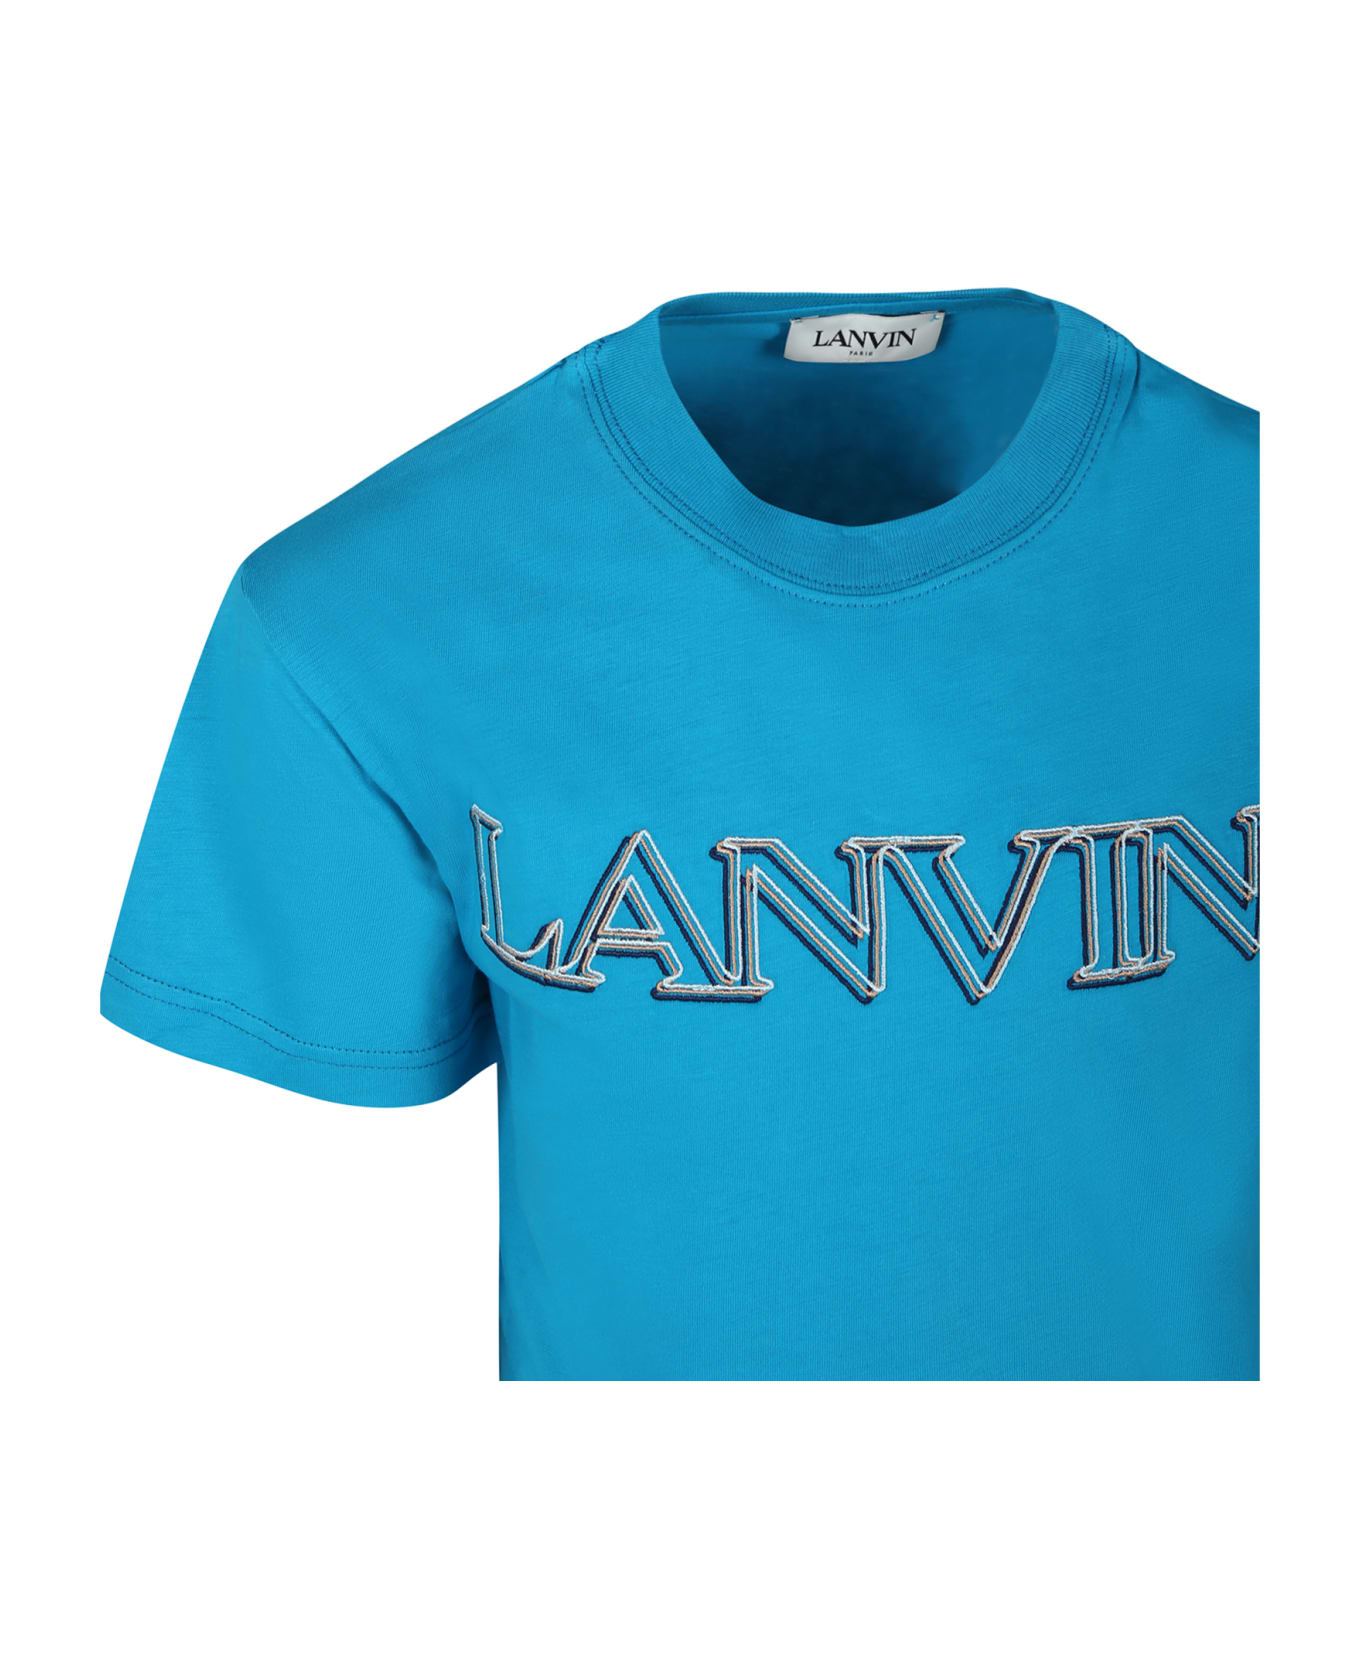 Lanvin Light Blue T-shirt For Boy With Logo - Light Blue